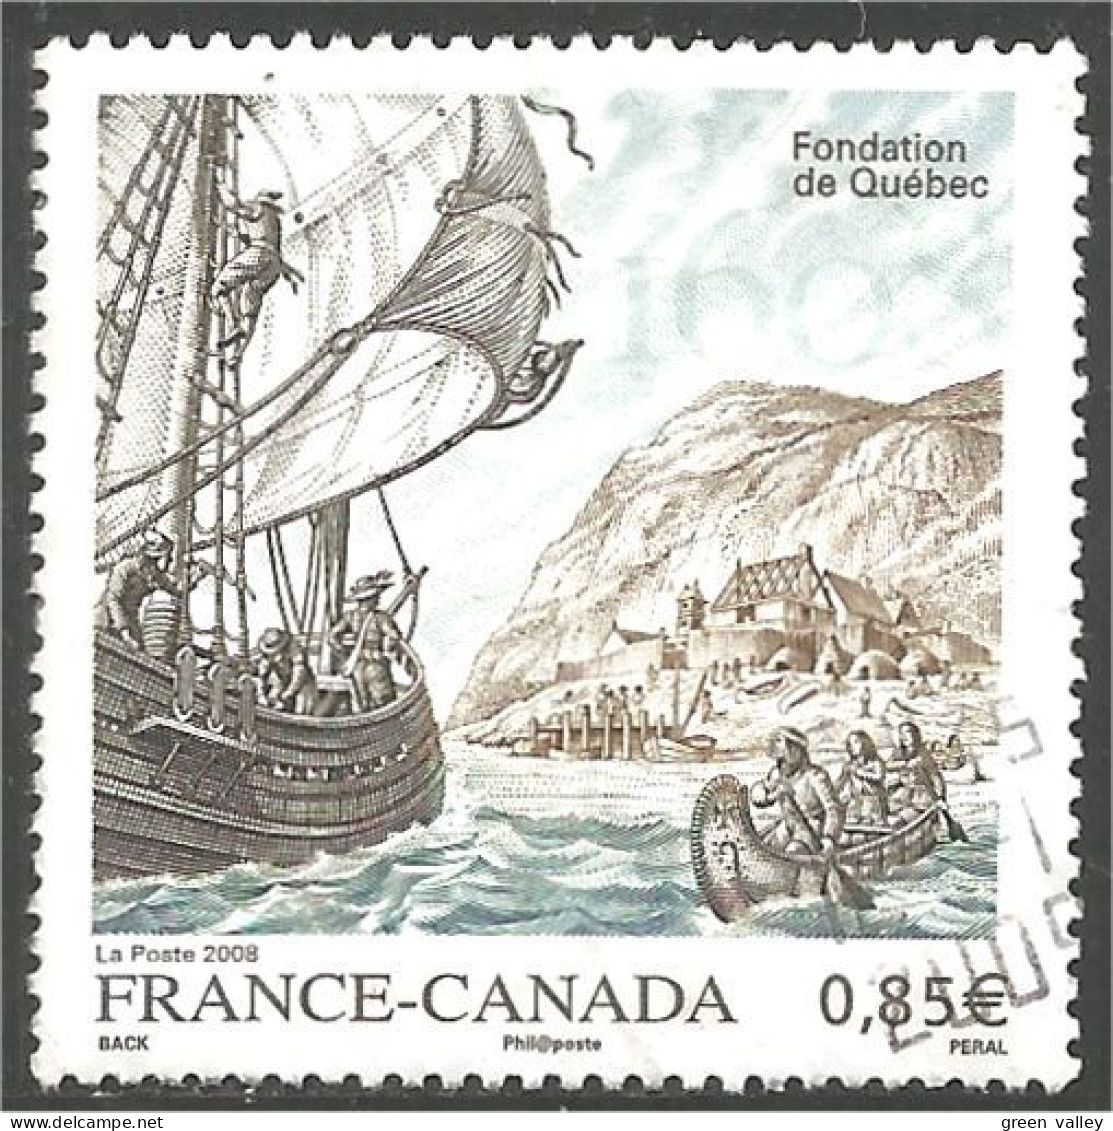 331eu-109 France Fondation Québec Foundation Canot Canoe Indien Indian - American Indians